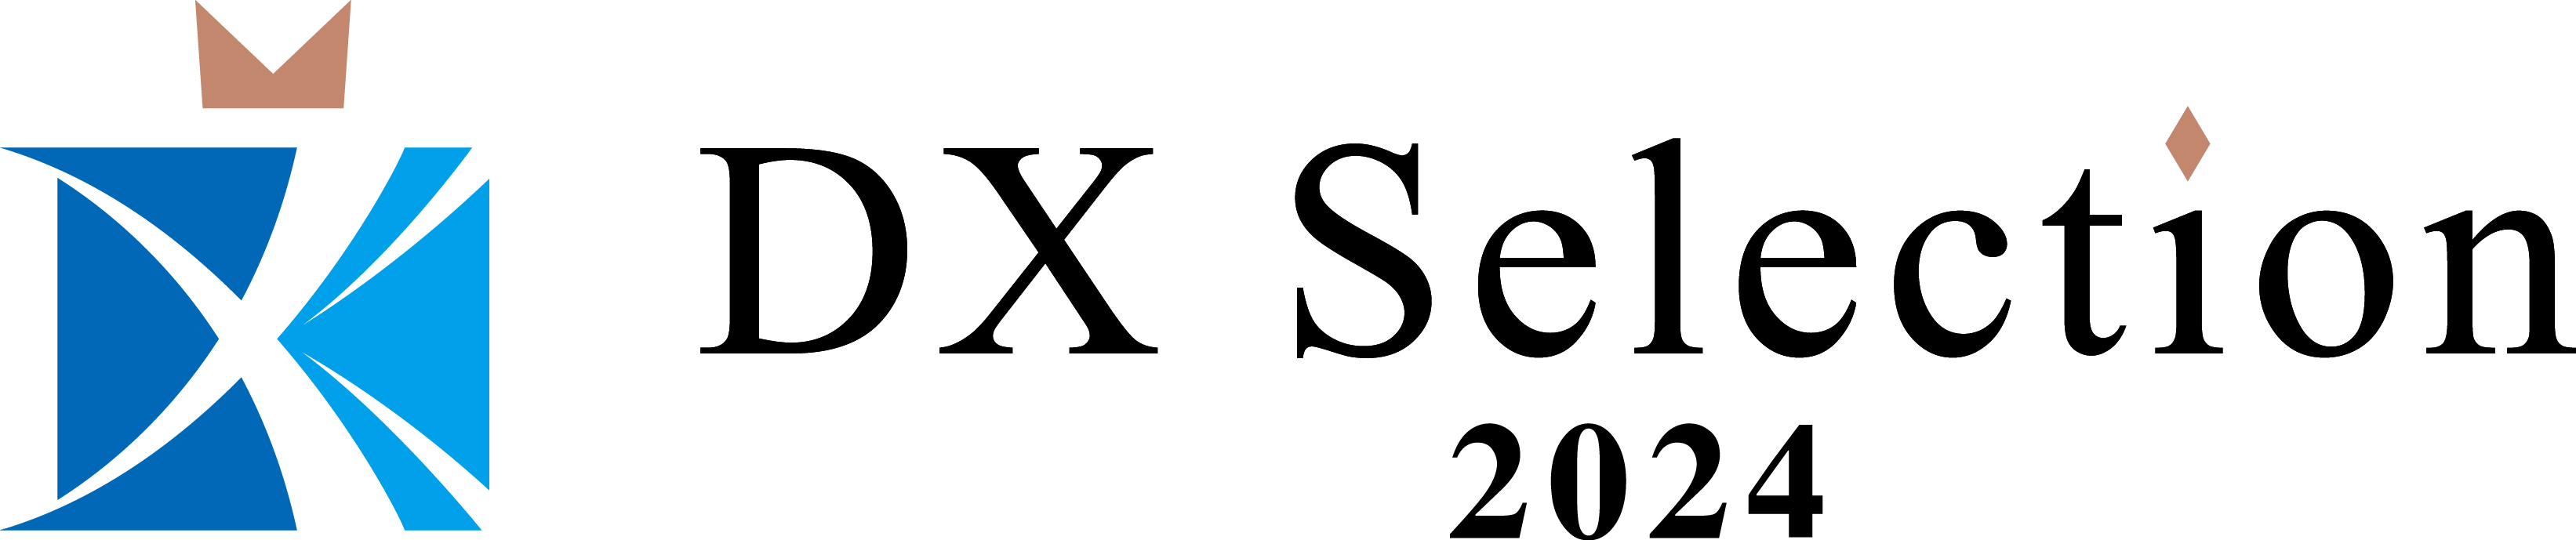 DXセレクション2024 ロゴ